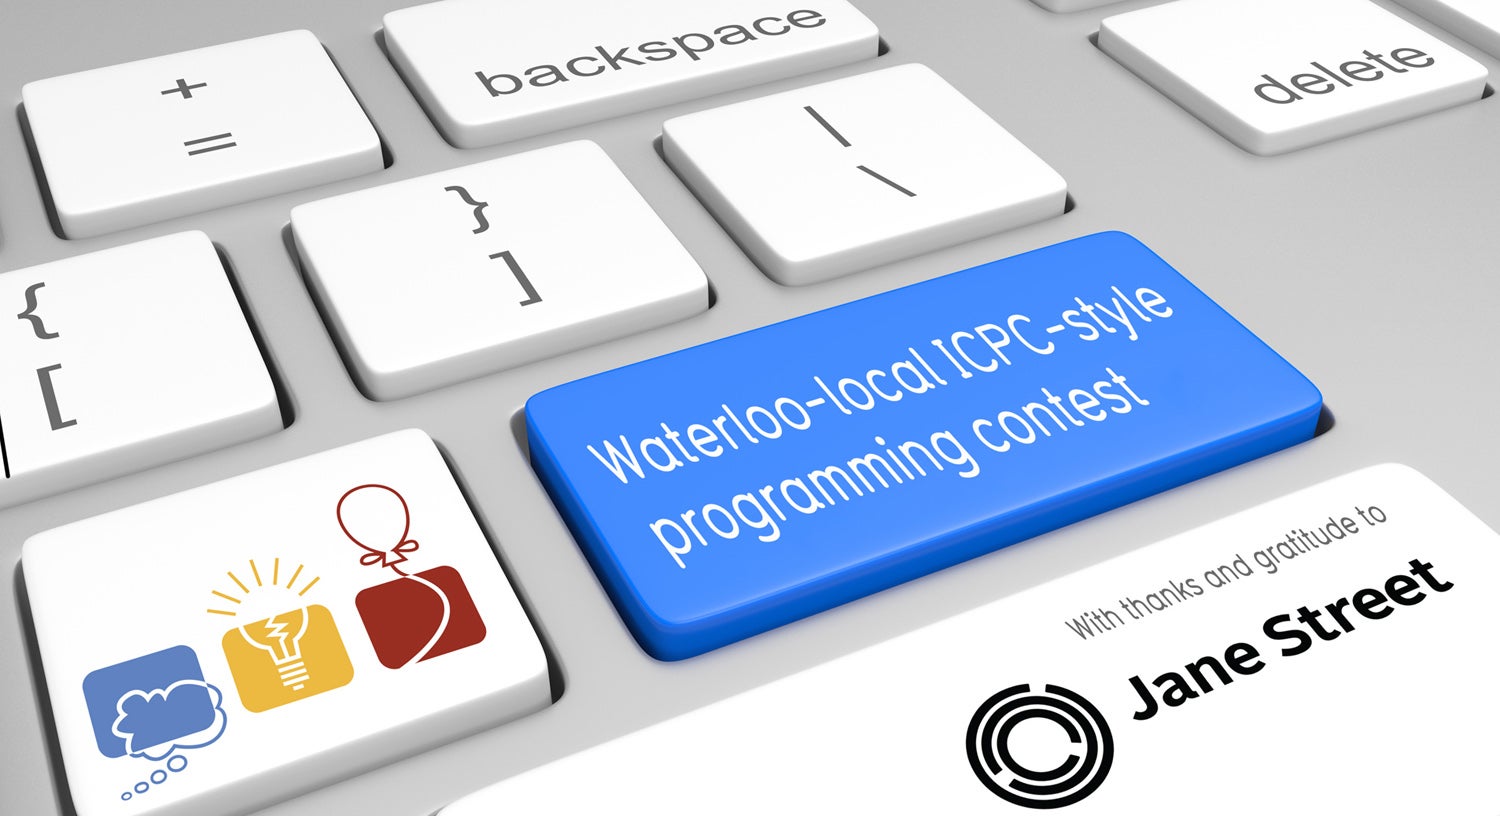 Waterloo-local ICPC-style programming contest